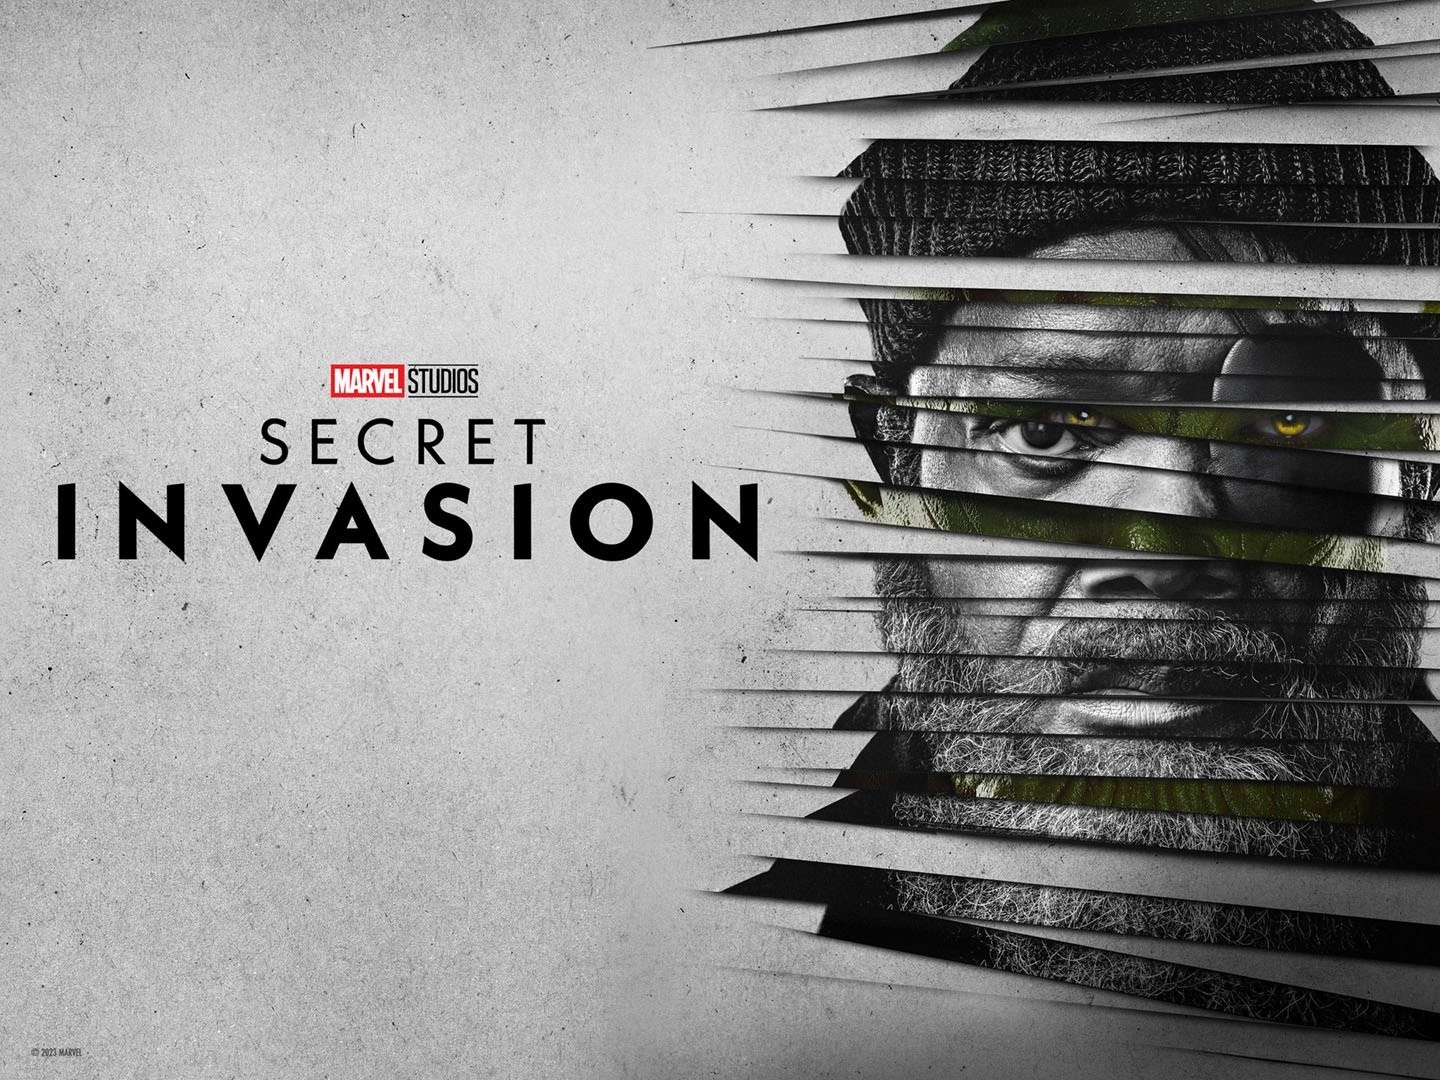 Secret Invasion' Release Schedule - When Does the Next Episode Air?